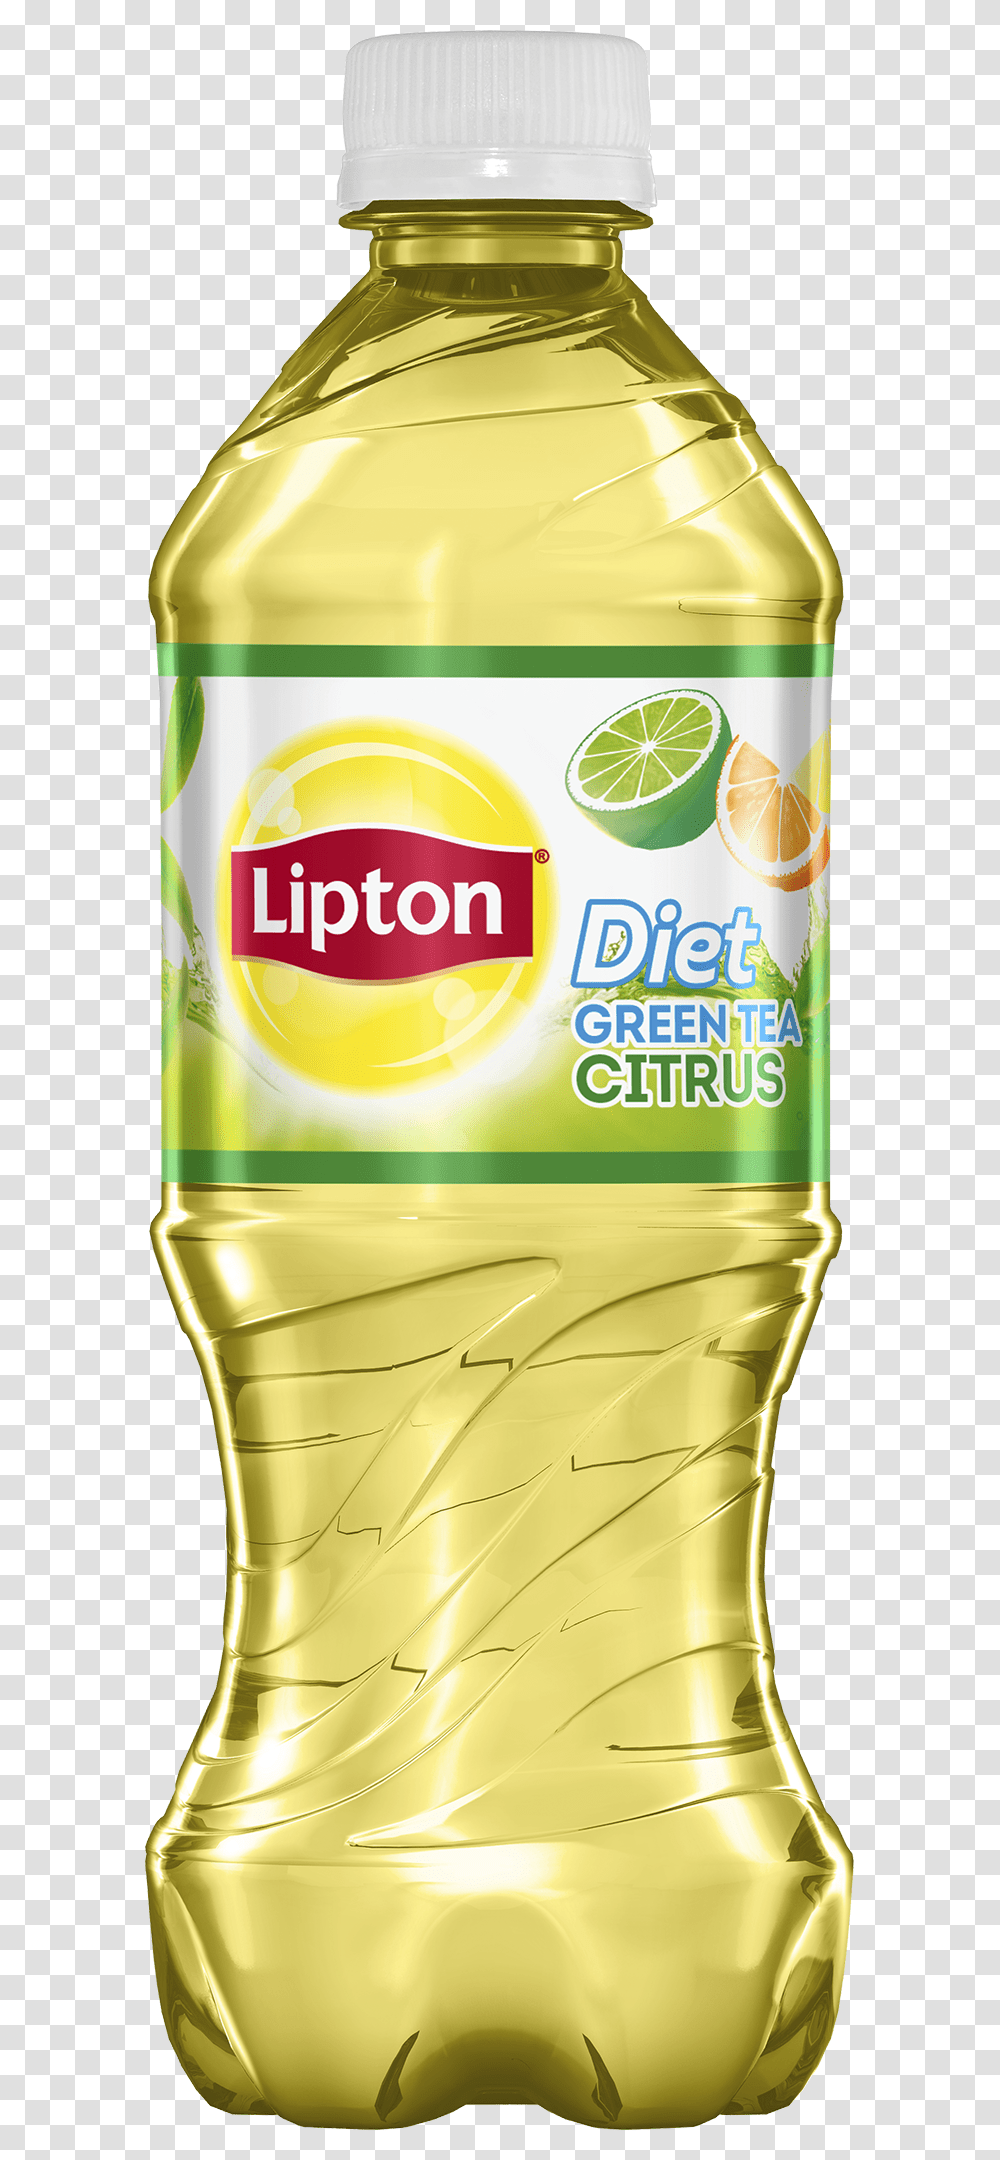 Lipton Green Tea Citrus, Bottle, Mineral Water, Beverage, Water Bottle Transparent Png